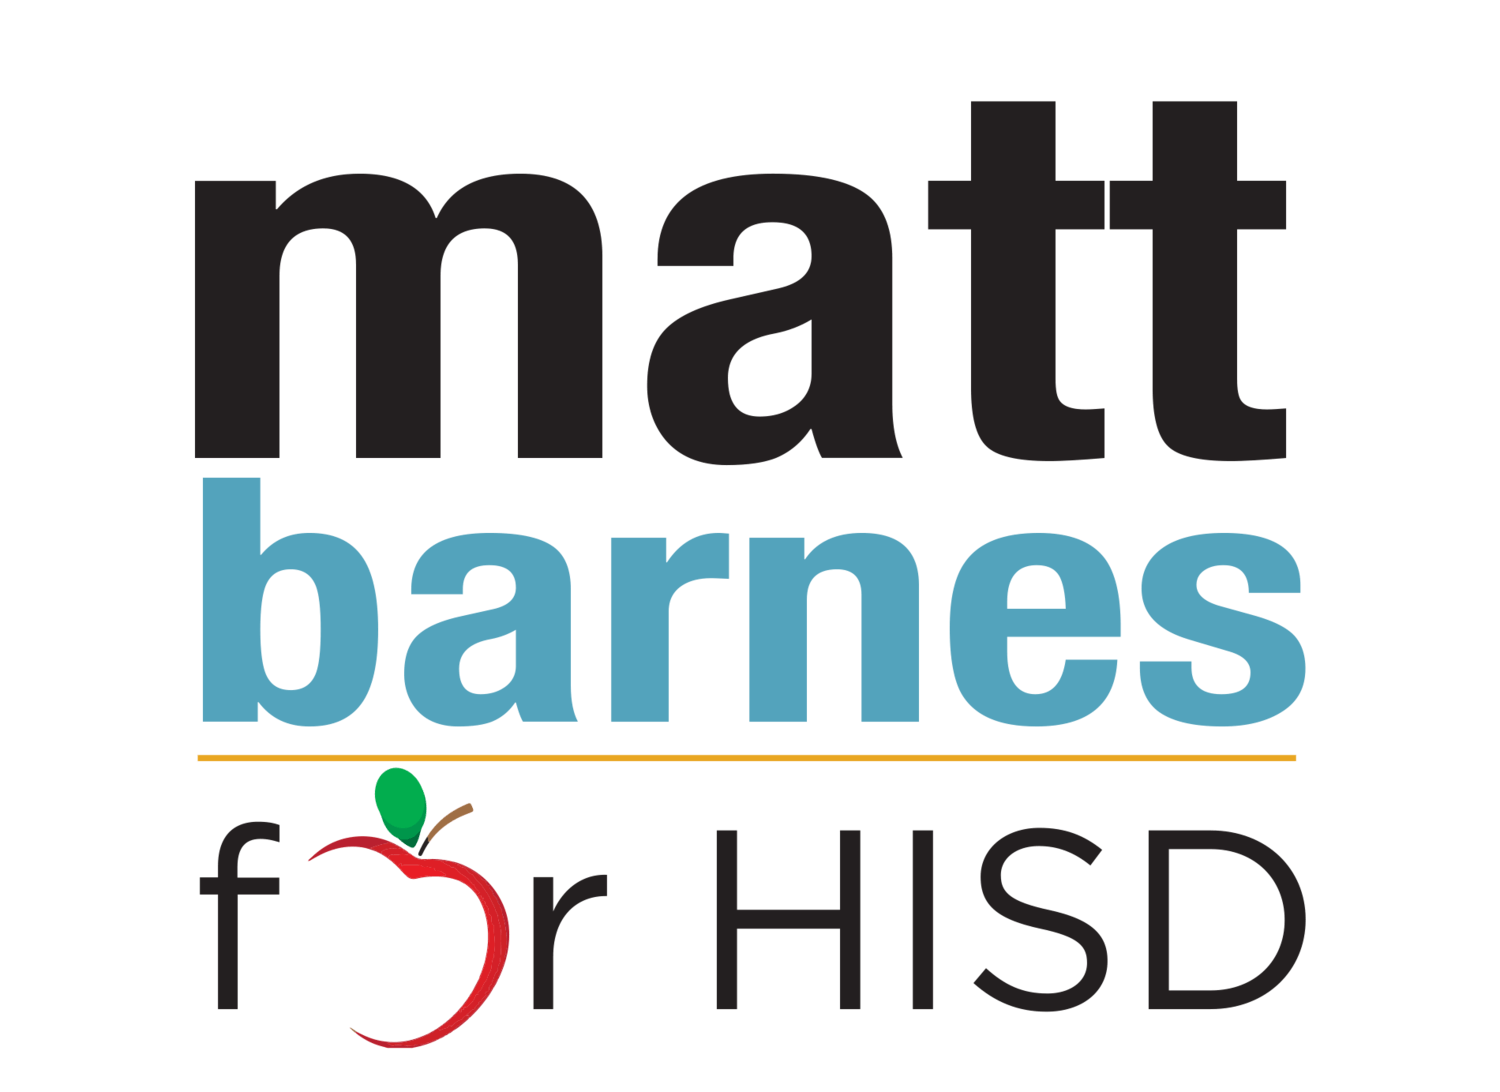 HISD Logo - Matt Barnes 4 Kids